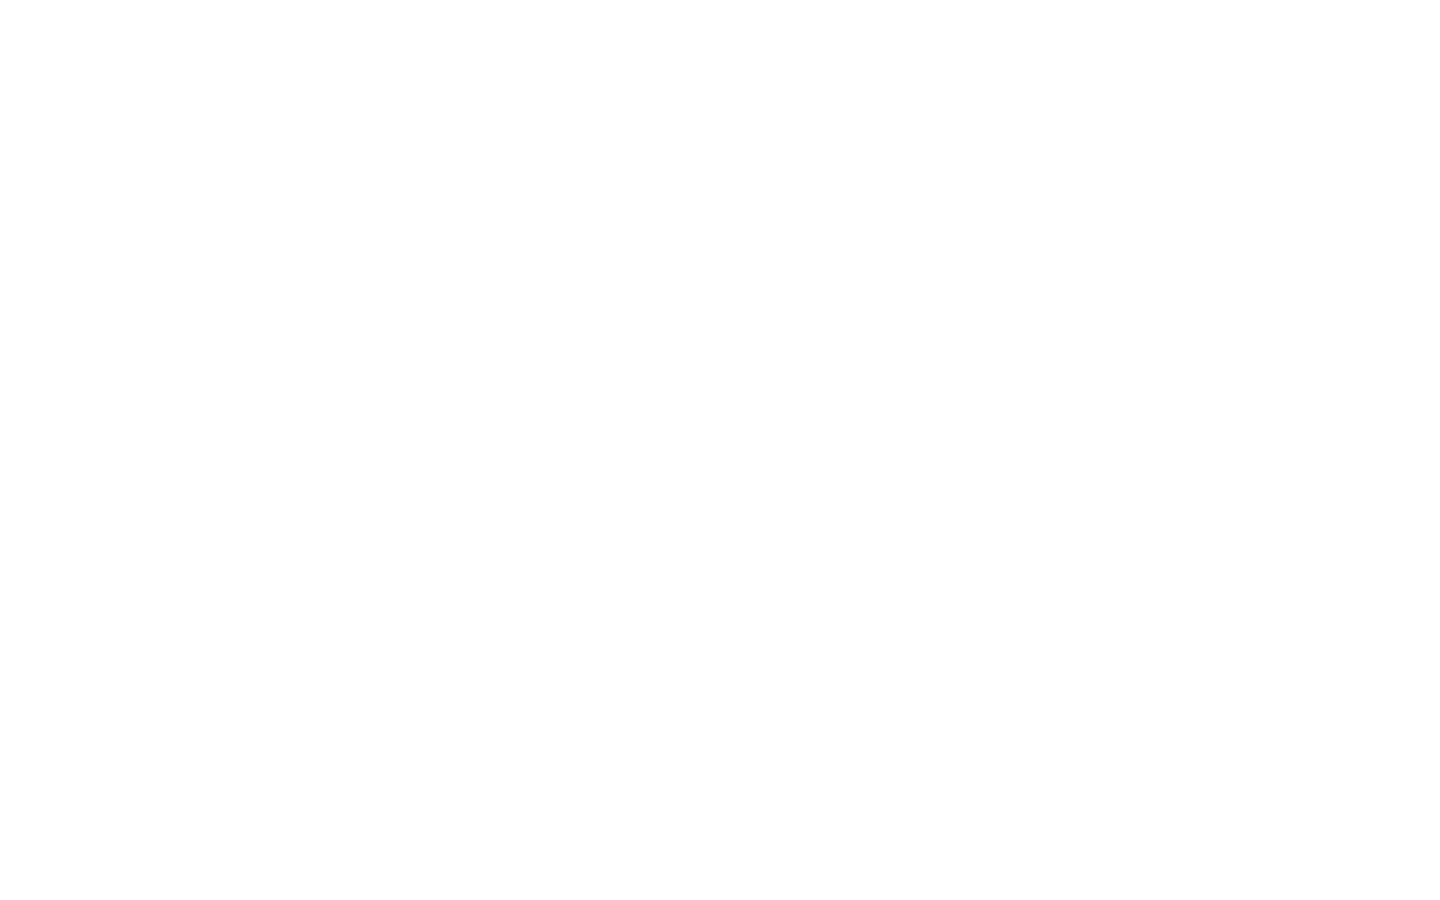 Huntsman logo